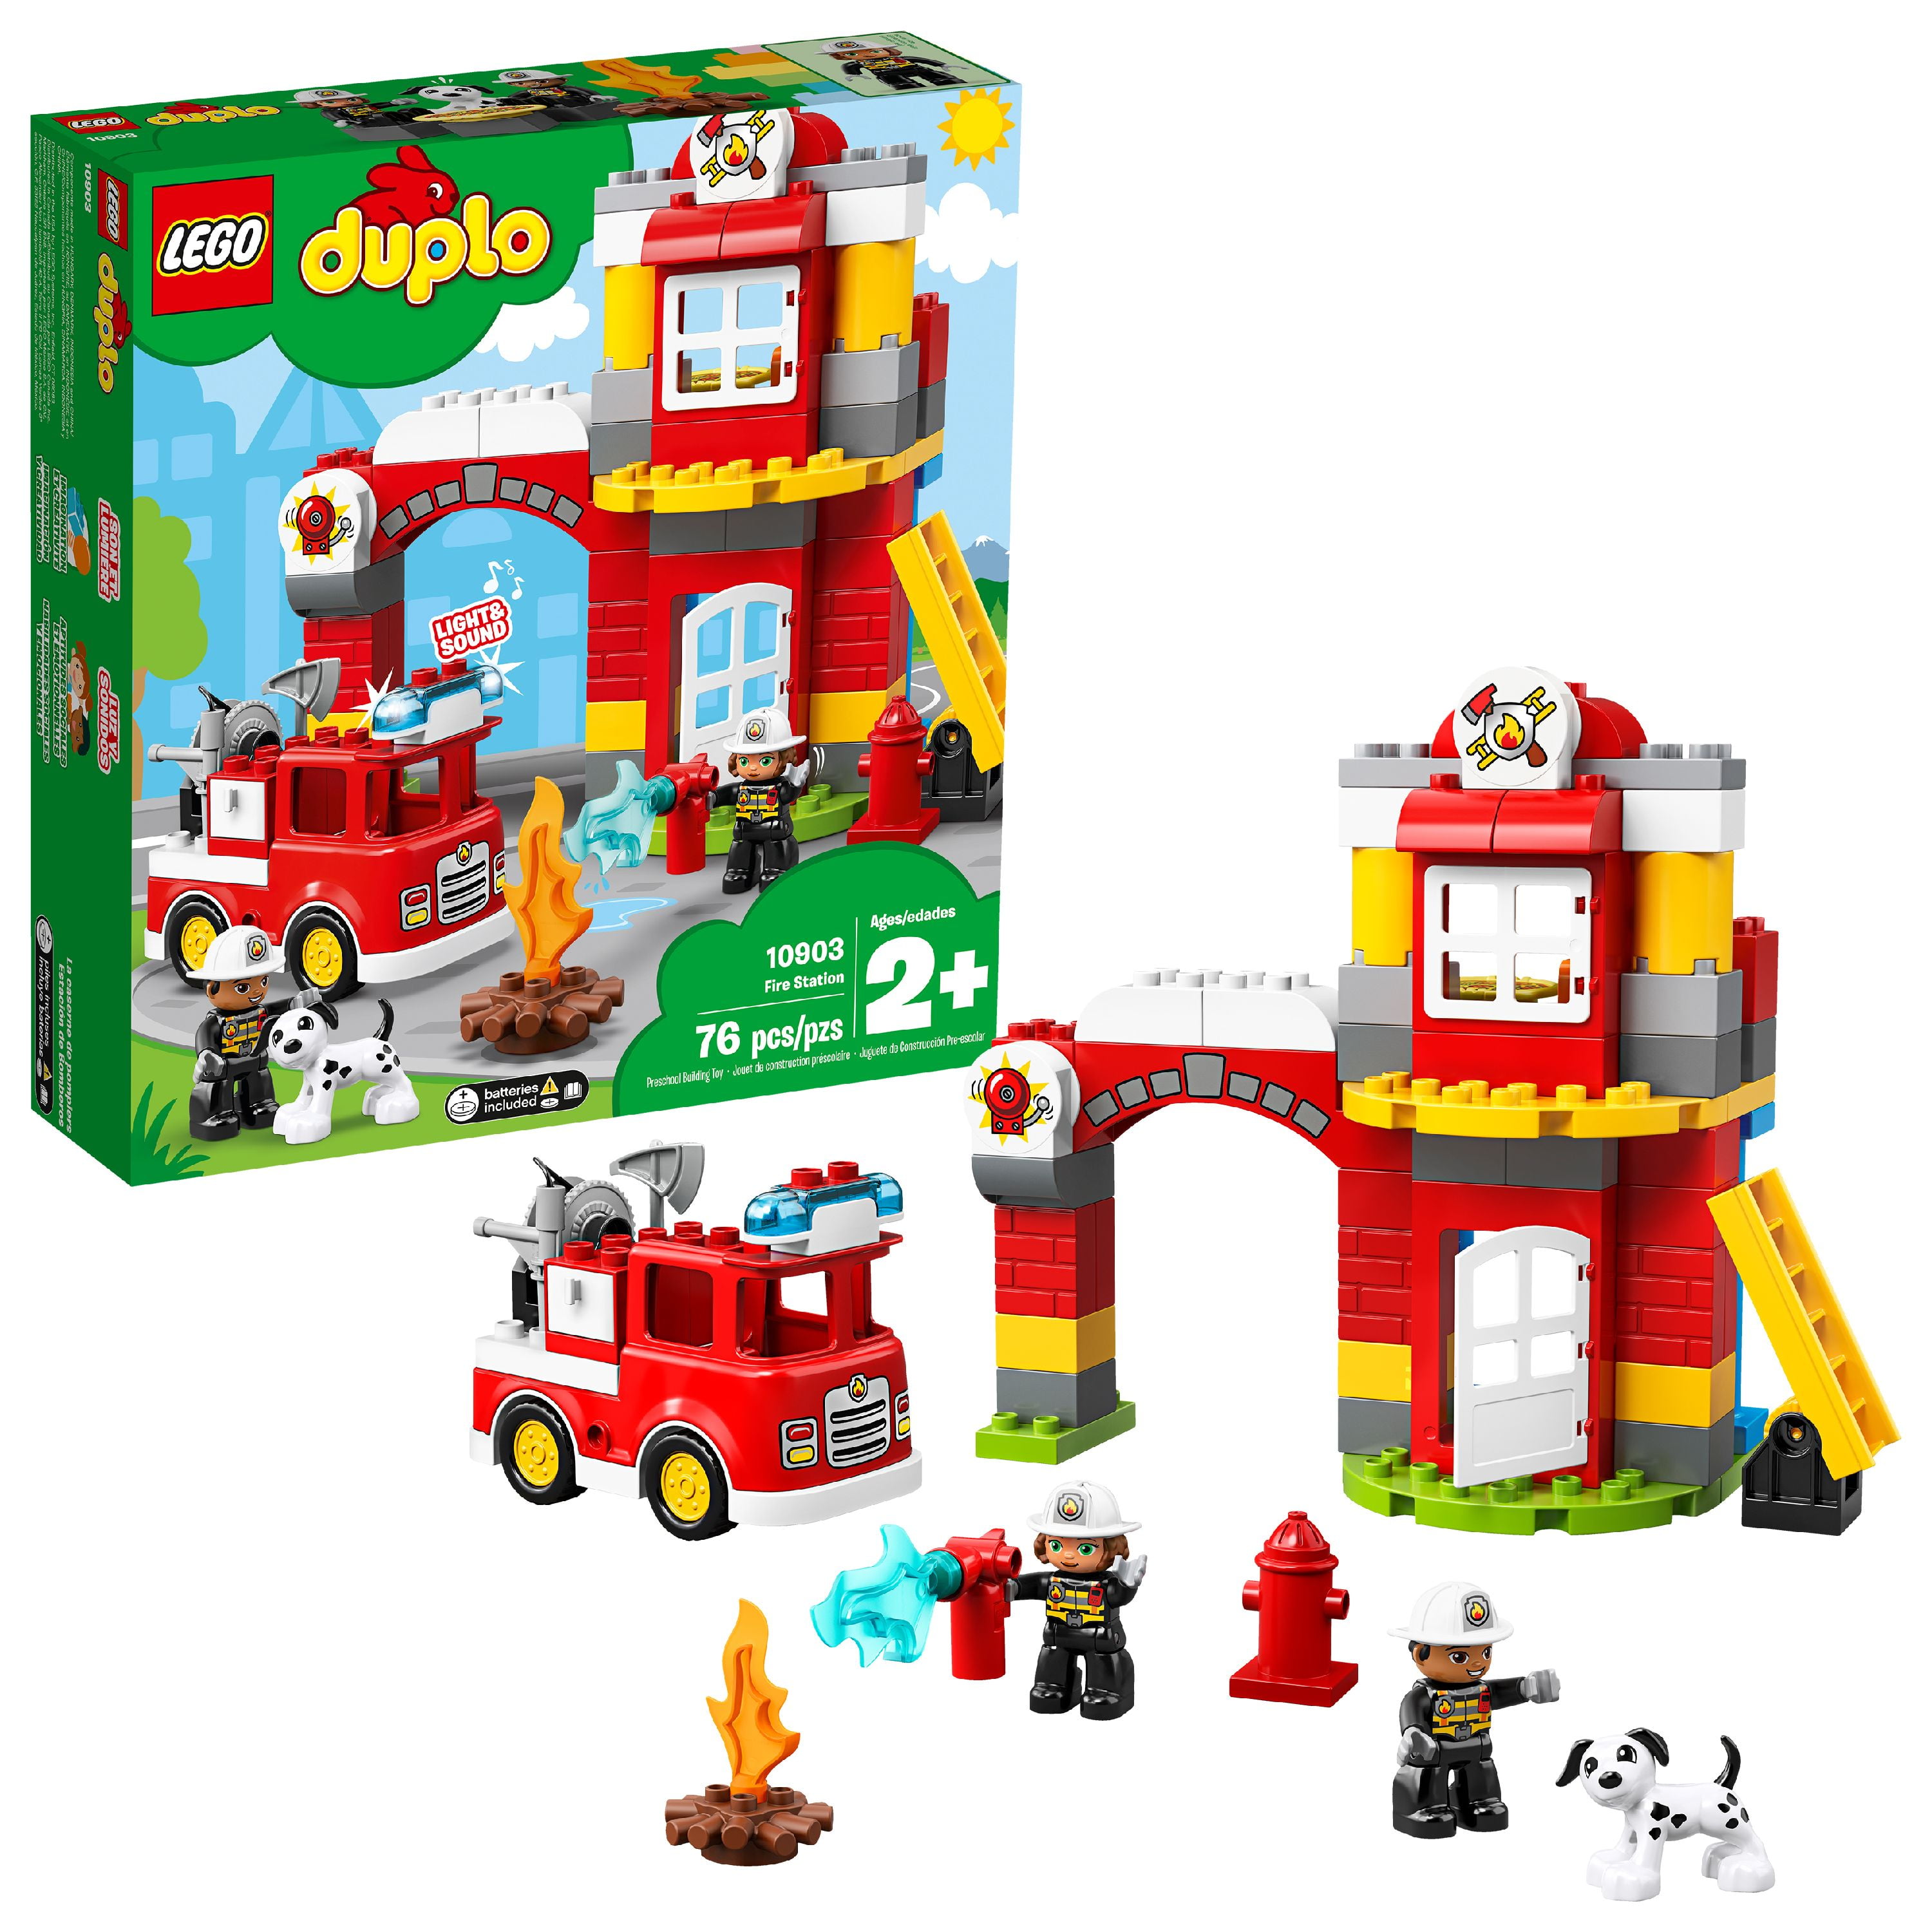 Lego Duplo Hoses Water Fire Department Gas Vehicles Construction House Lot Set 